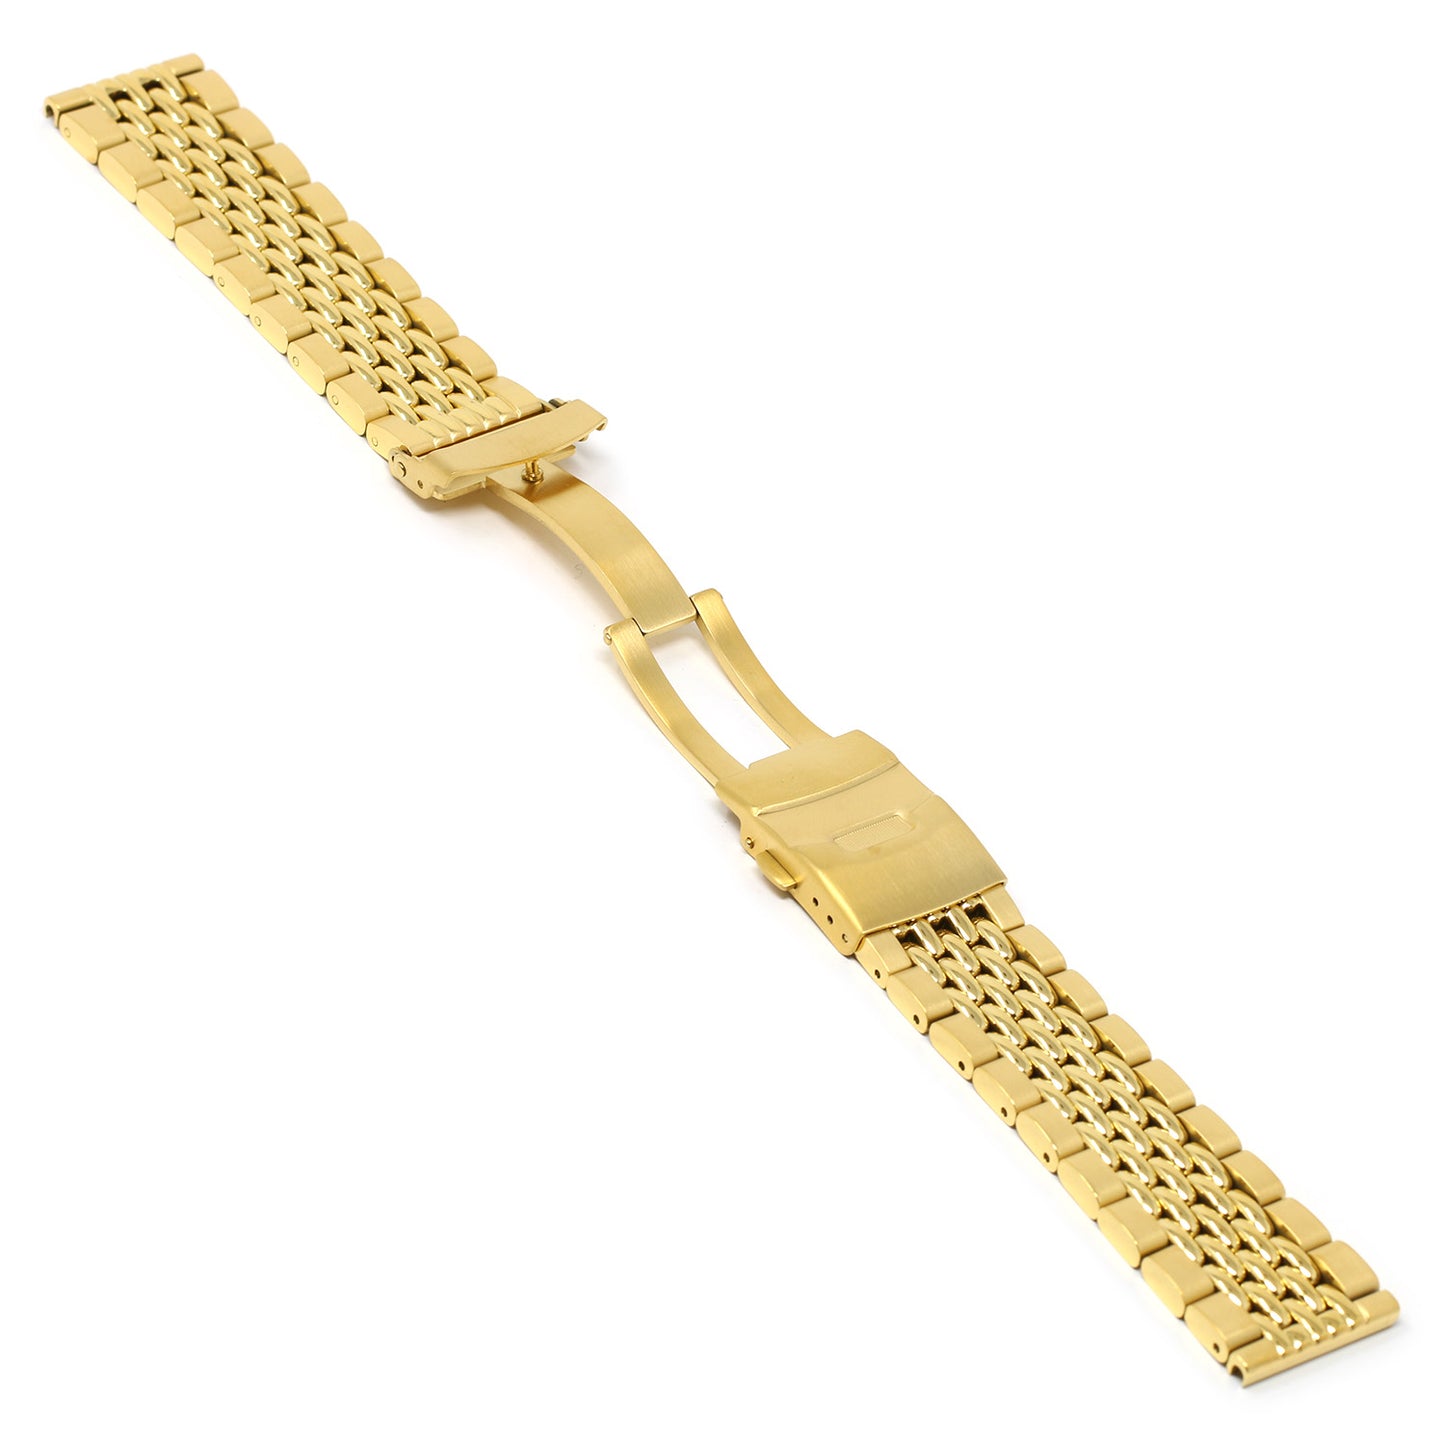 22mm Beads of Rice Smart Watch Bracelet